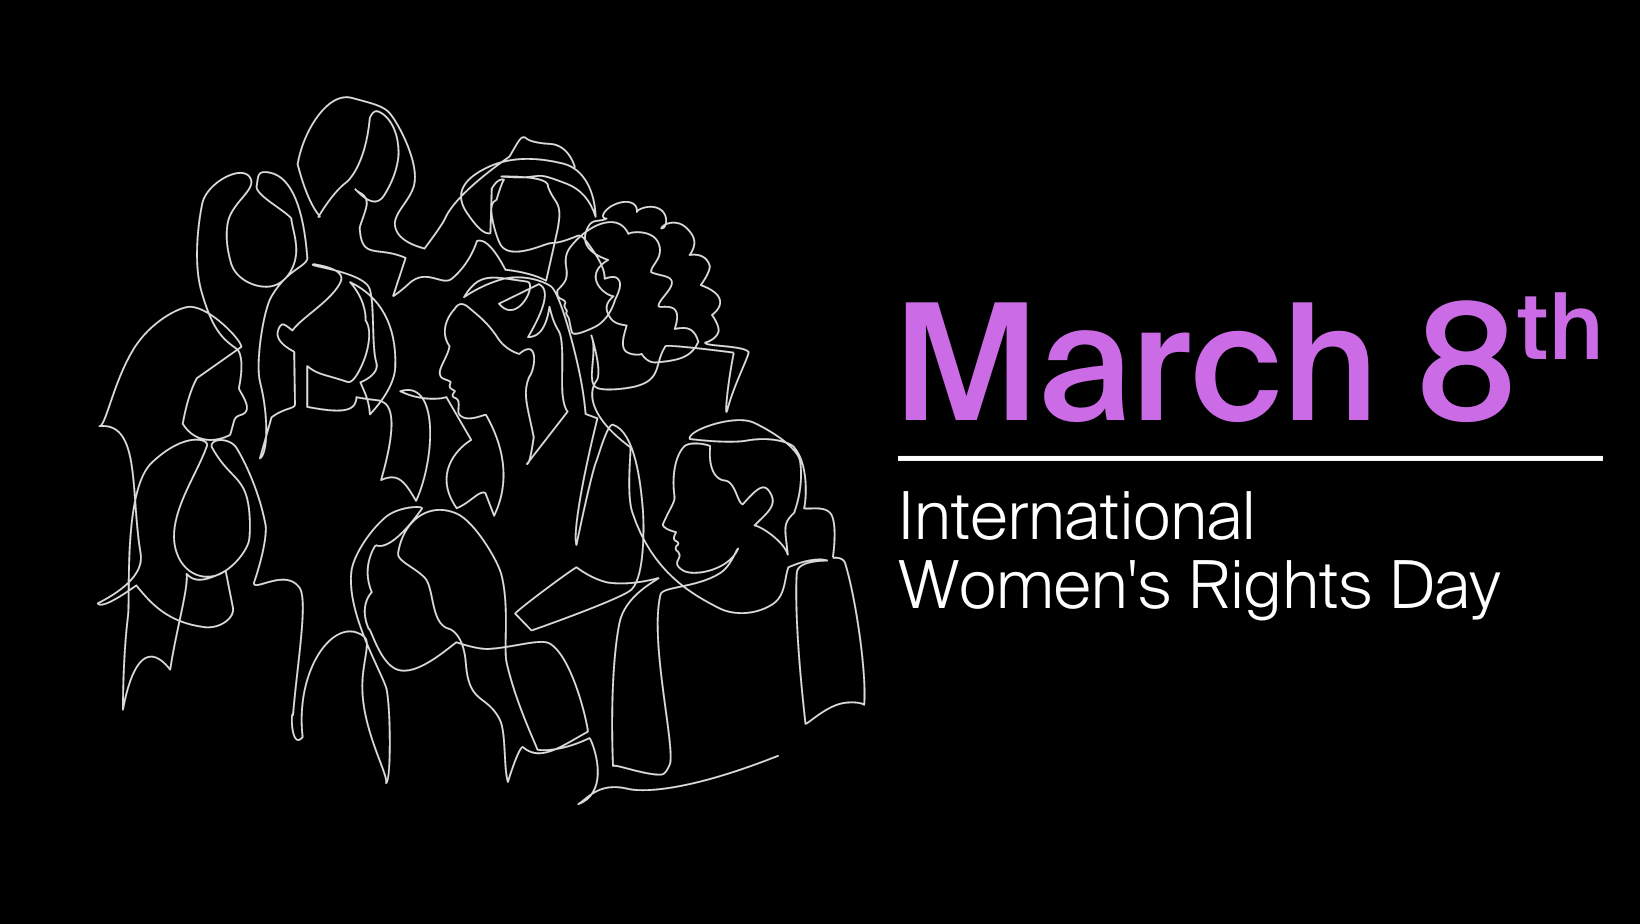 International Women's Rights Day